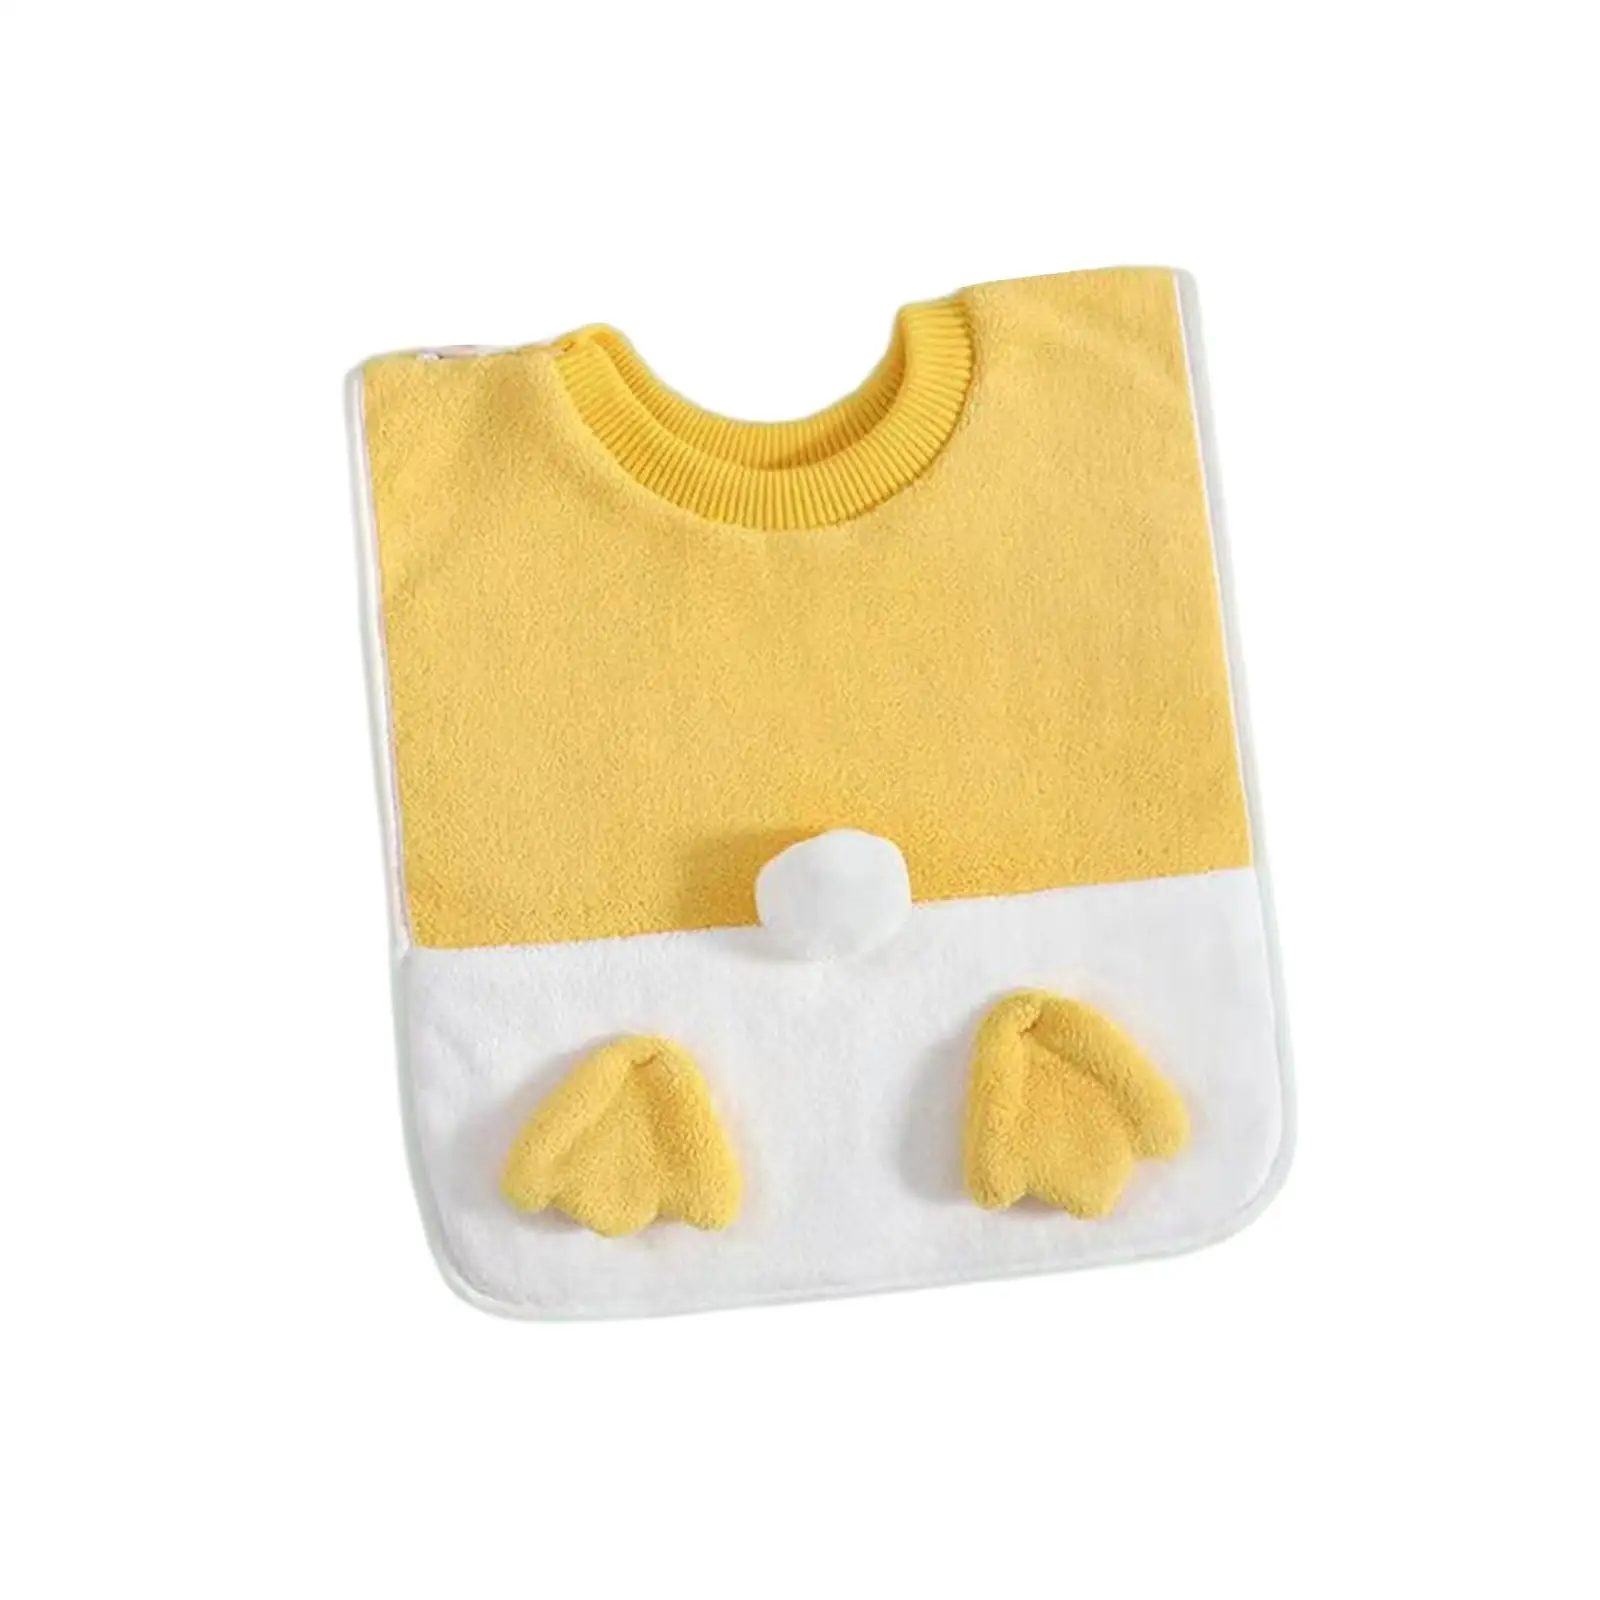 Kid Bib Keep Kids Clothes Dry Machine Washable Child Brushing Teeth Bib Water Resistant Lining Saliva Towels Cute Baby Apron